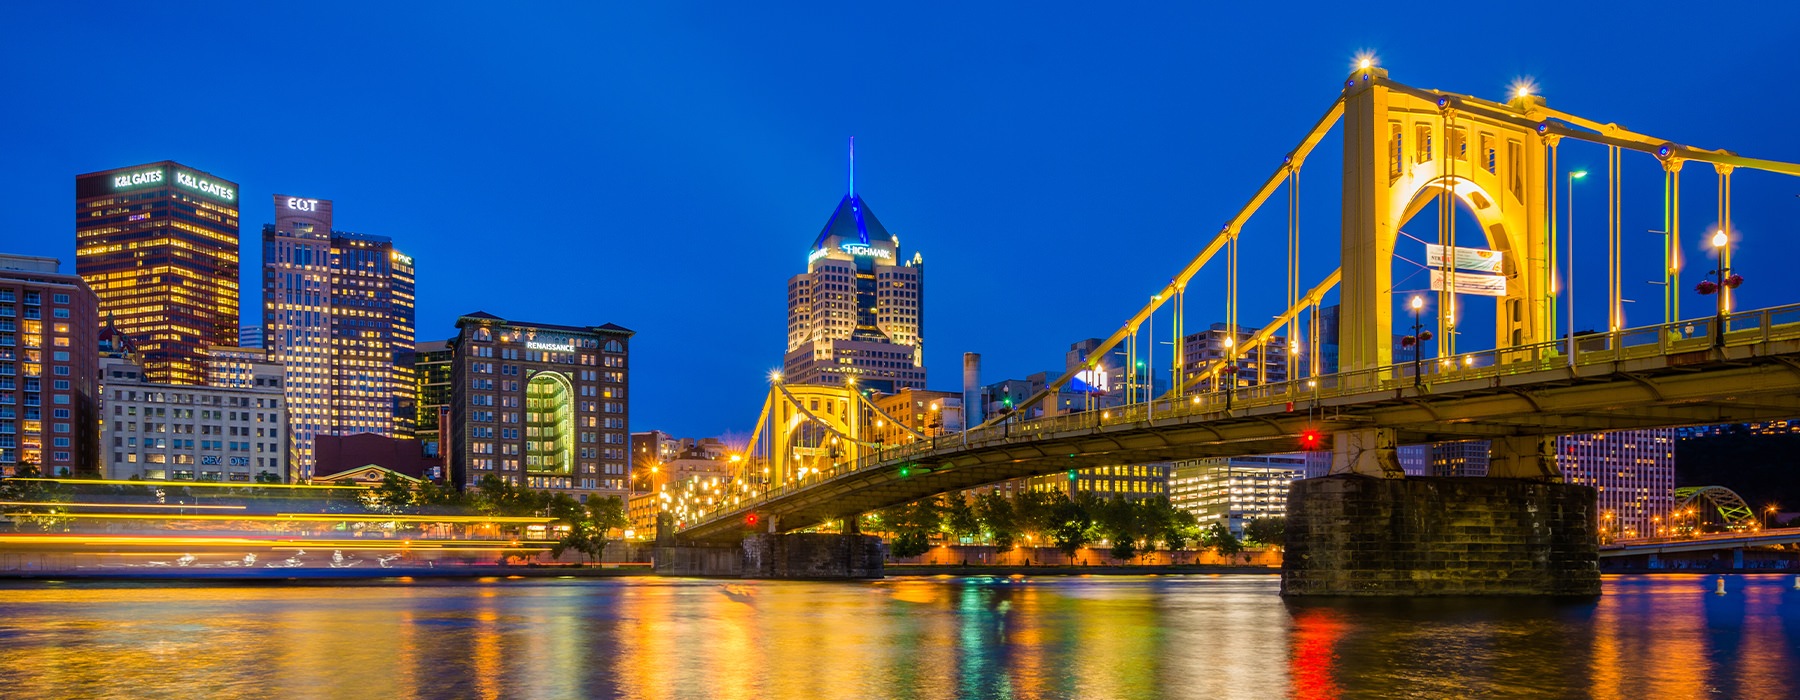 Nighttime skyline shot of East bridge in Pittsburgh.